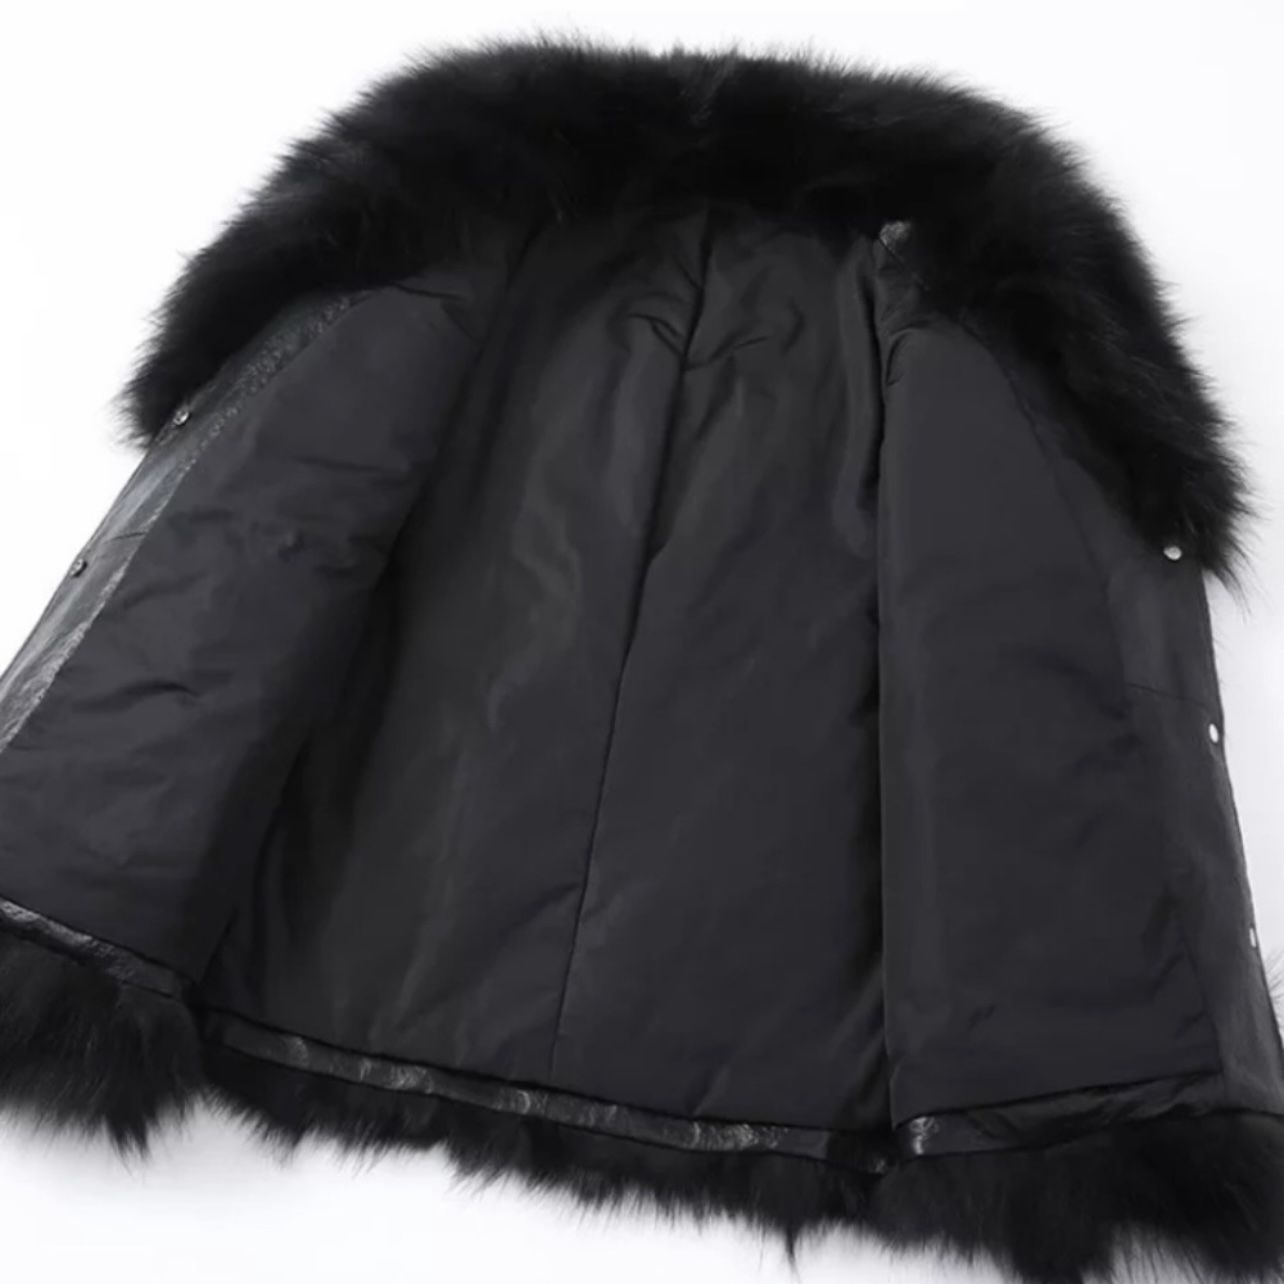 Genuine fox Fur Coat genuine leather jacket vest warm long sleeve trench bomber Jacket Fur Sheepskin Jacket Studs 